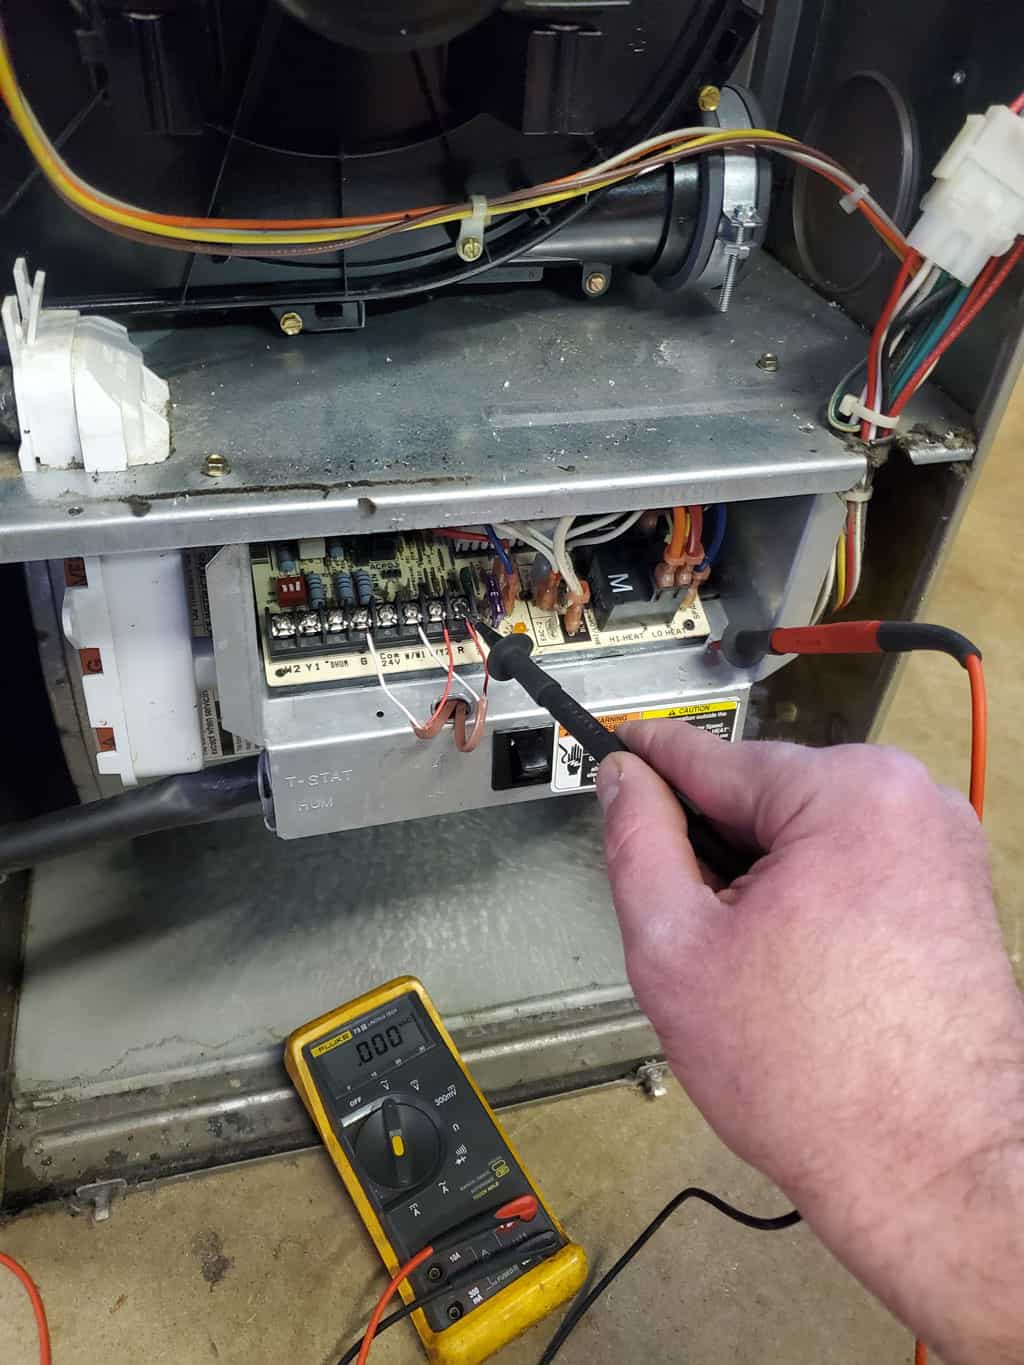 Repairing a furnace.